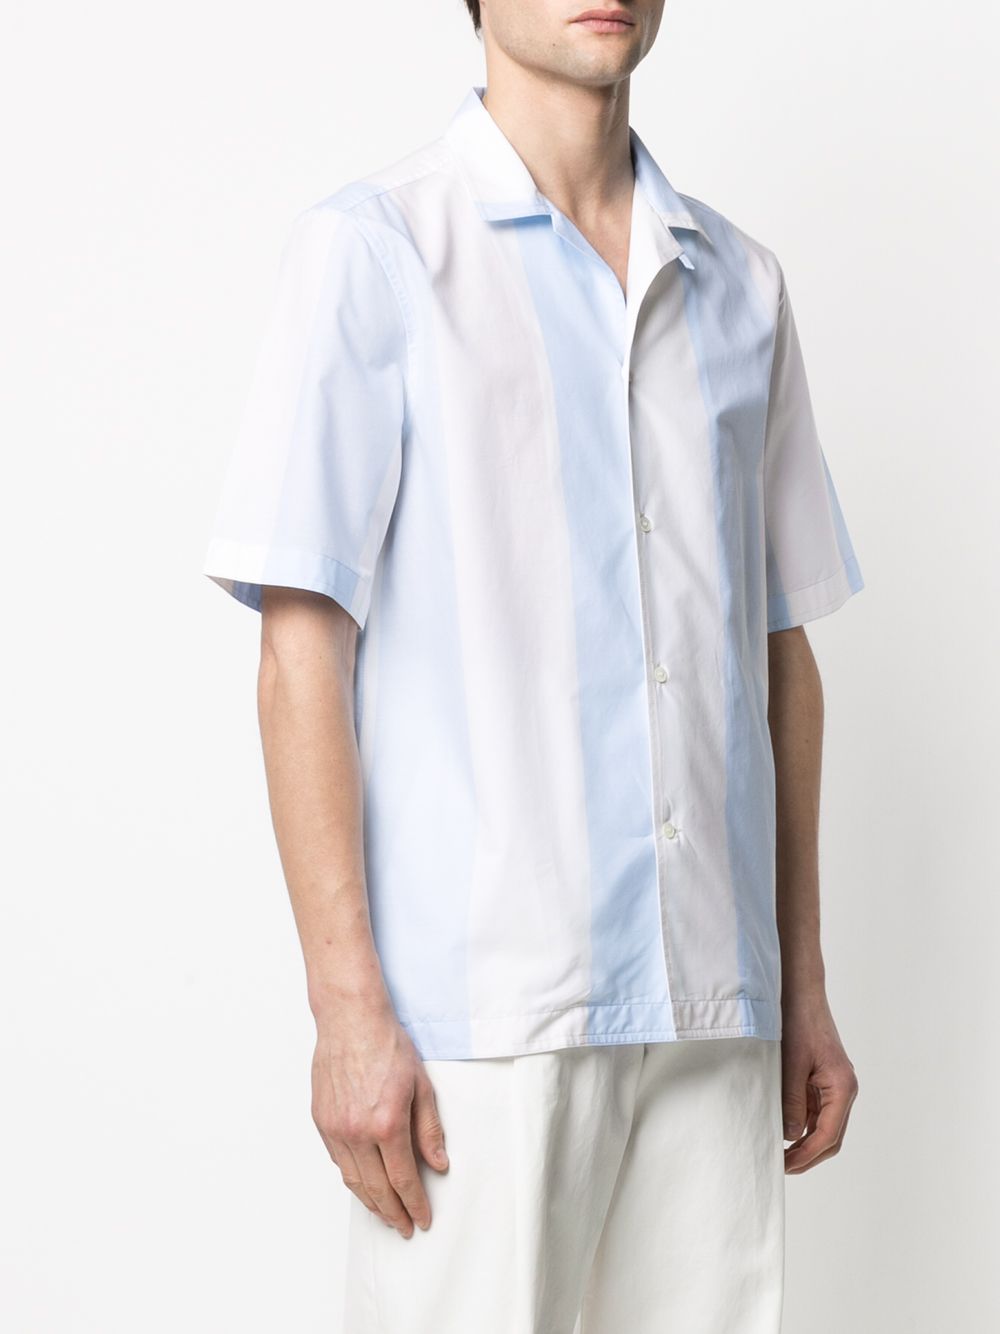 фото Salvatore ferragamo полосатая рубашка с короткими рукавами